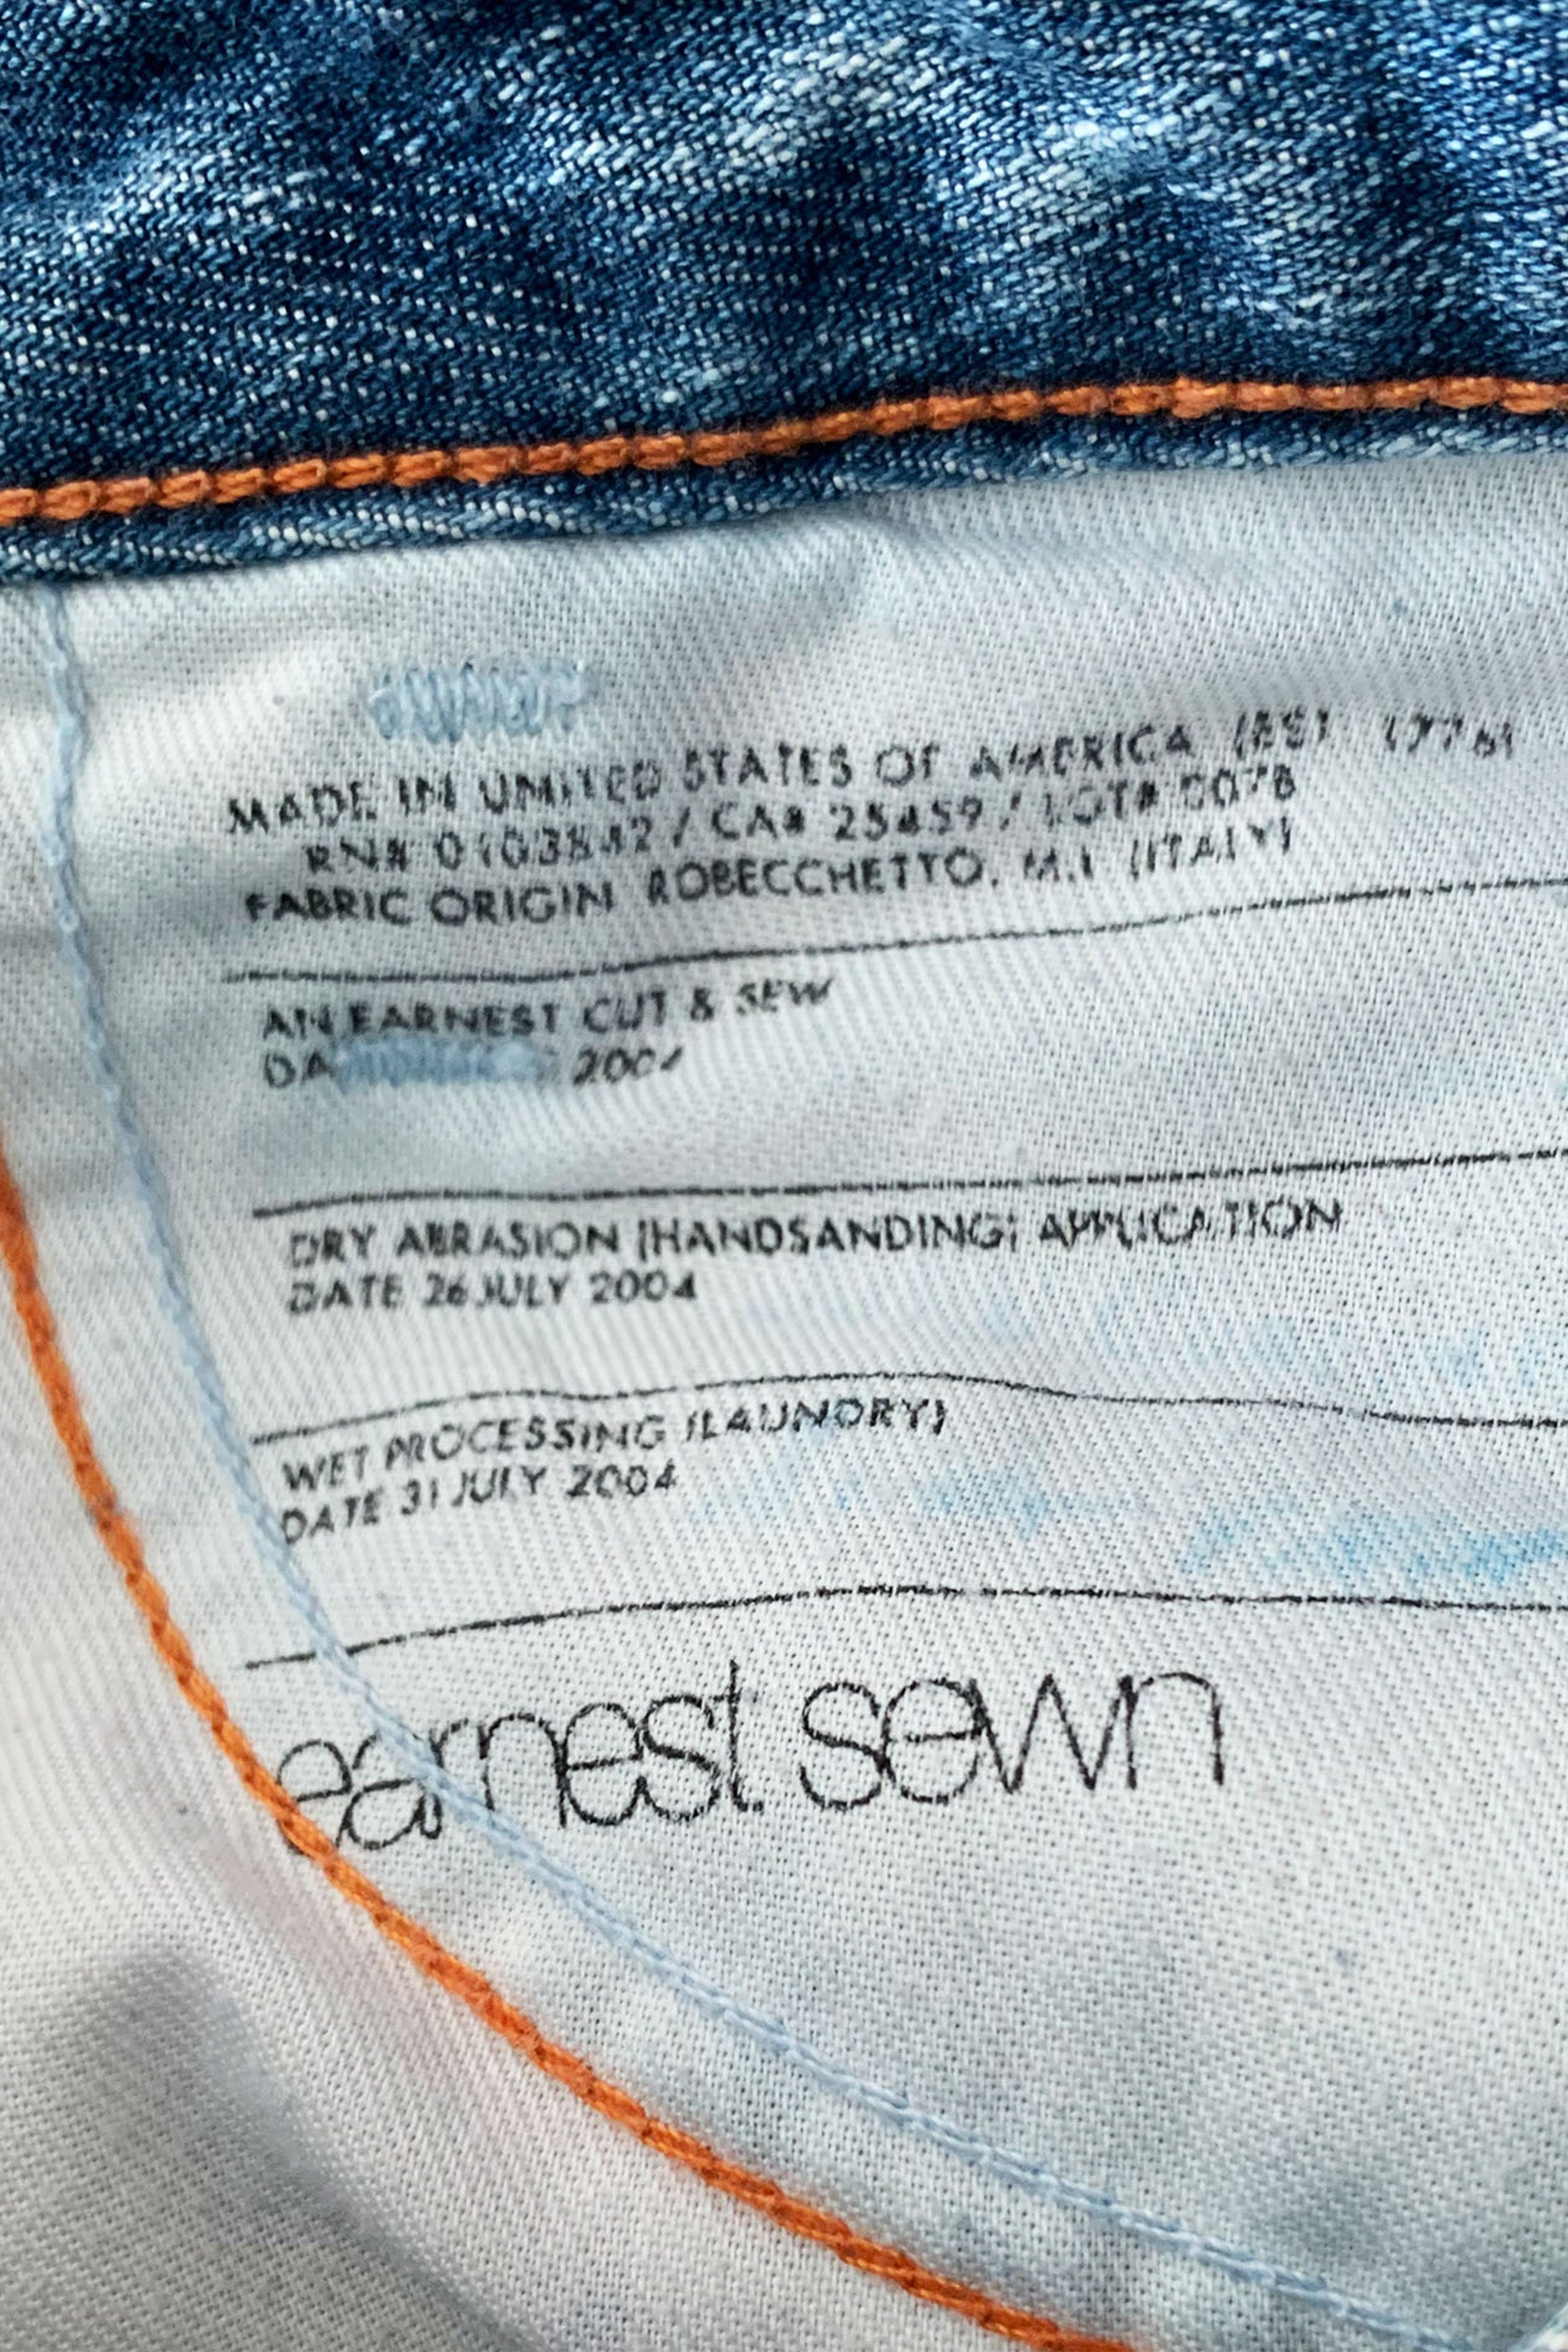 Earnest Sewn jeans | Earnest sewn jeans, Earnest sewn, Blue denim jeans